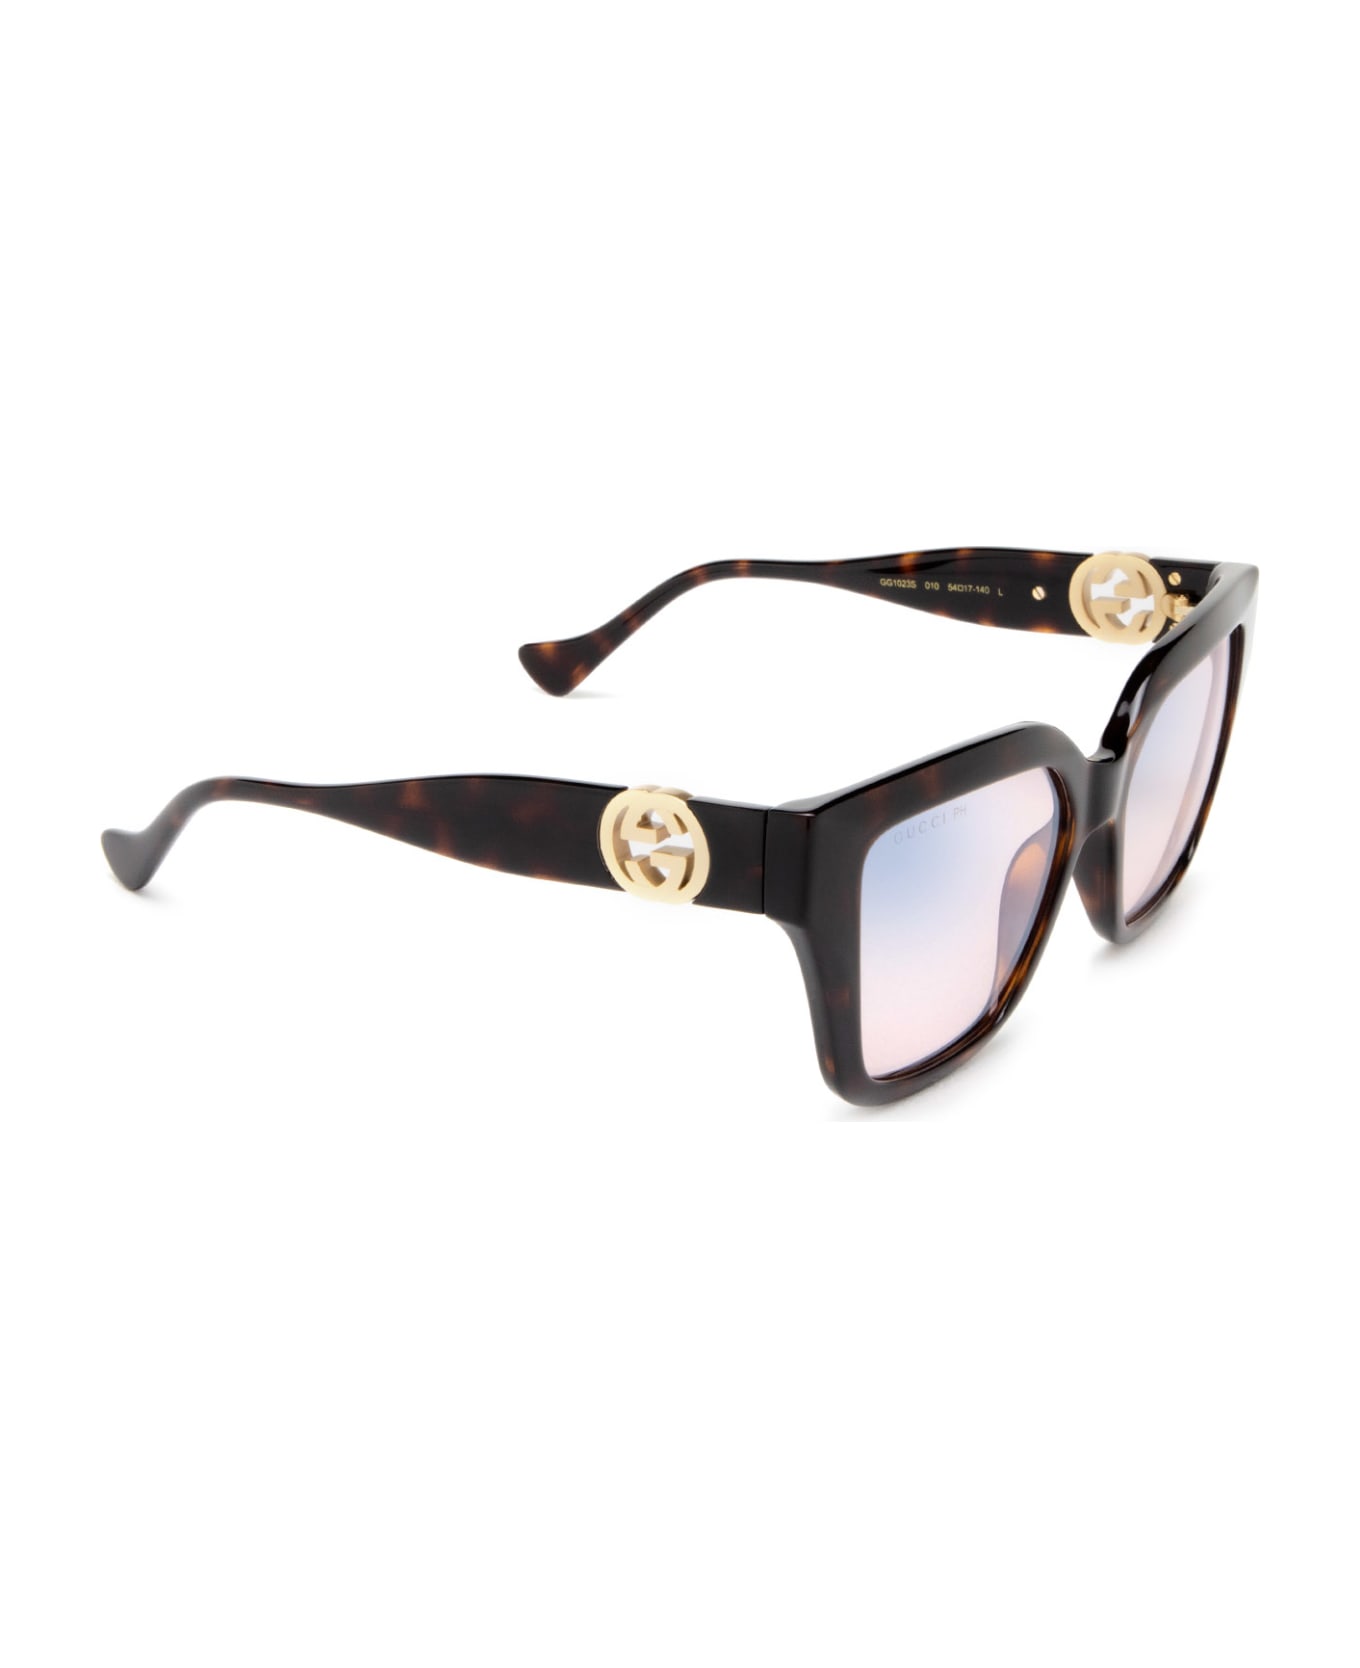 Gucci Eyewear Gg1023s Havana Sunglasses - Havana